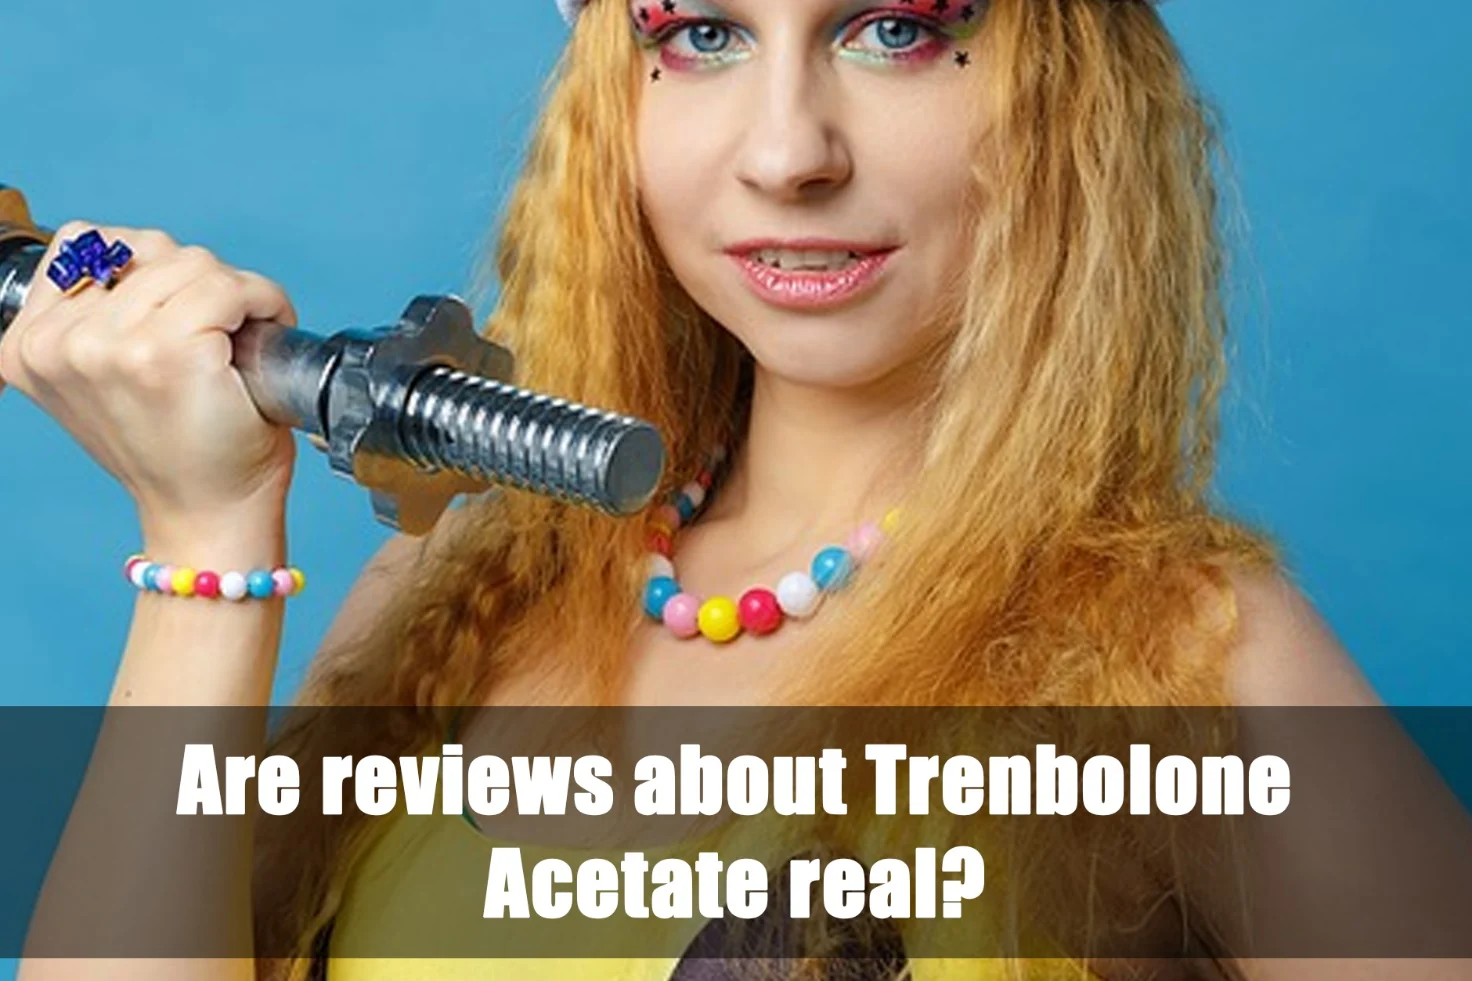 Reviews about Trenbolone Acetate